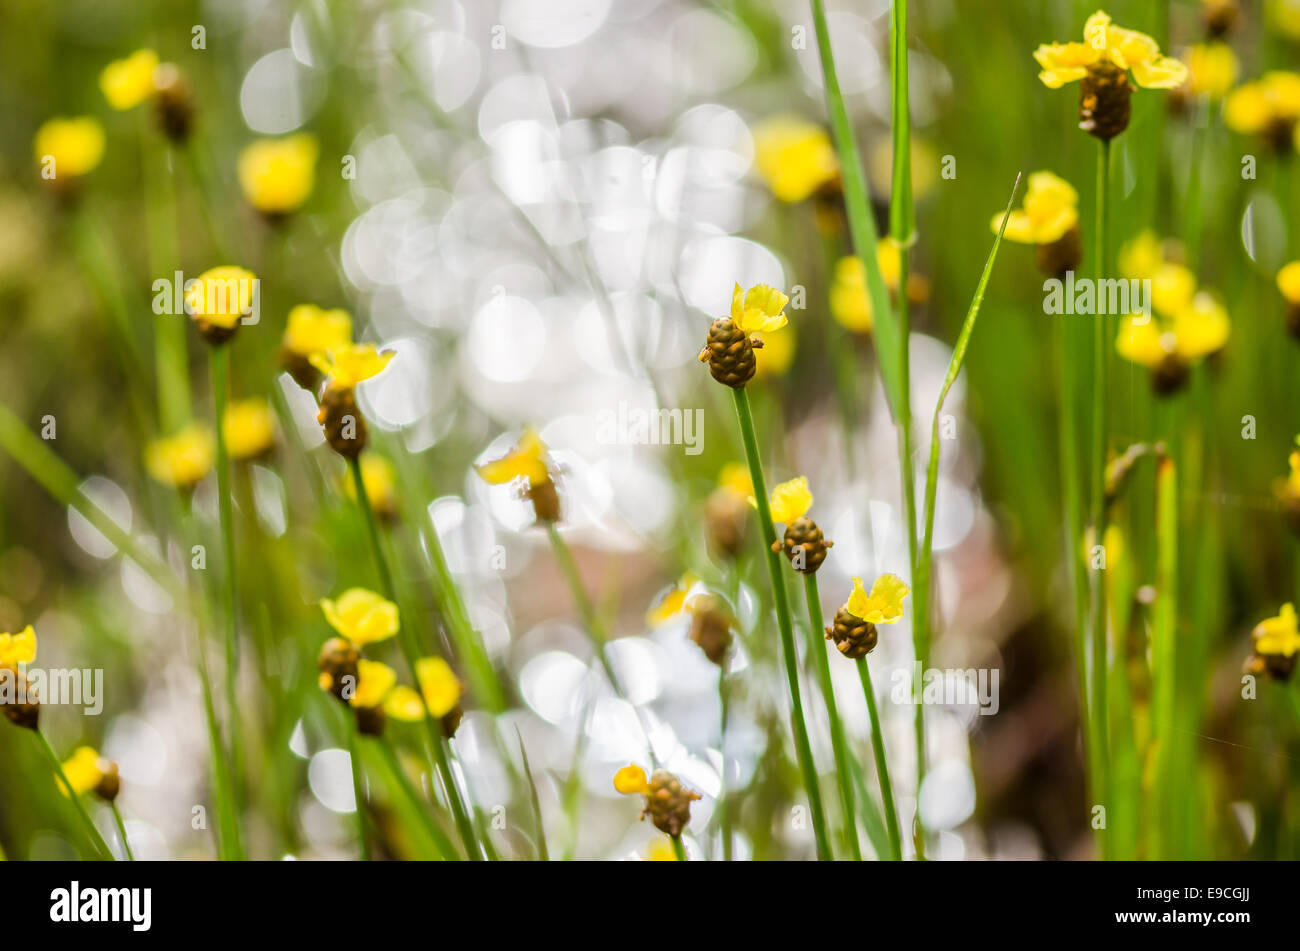 Xyris yellow flowers or Xyridaceae wild flower in Thailand Stock Photo